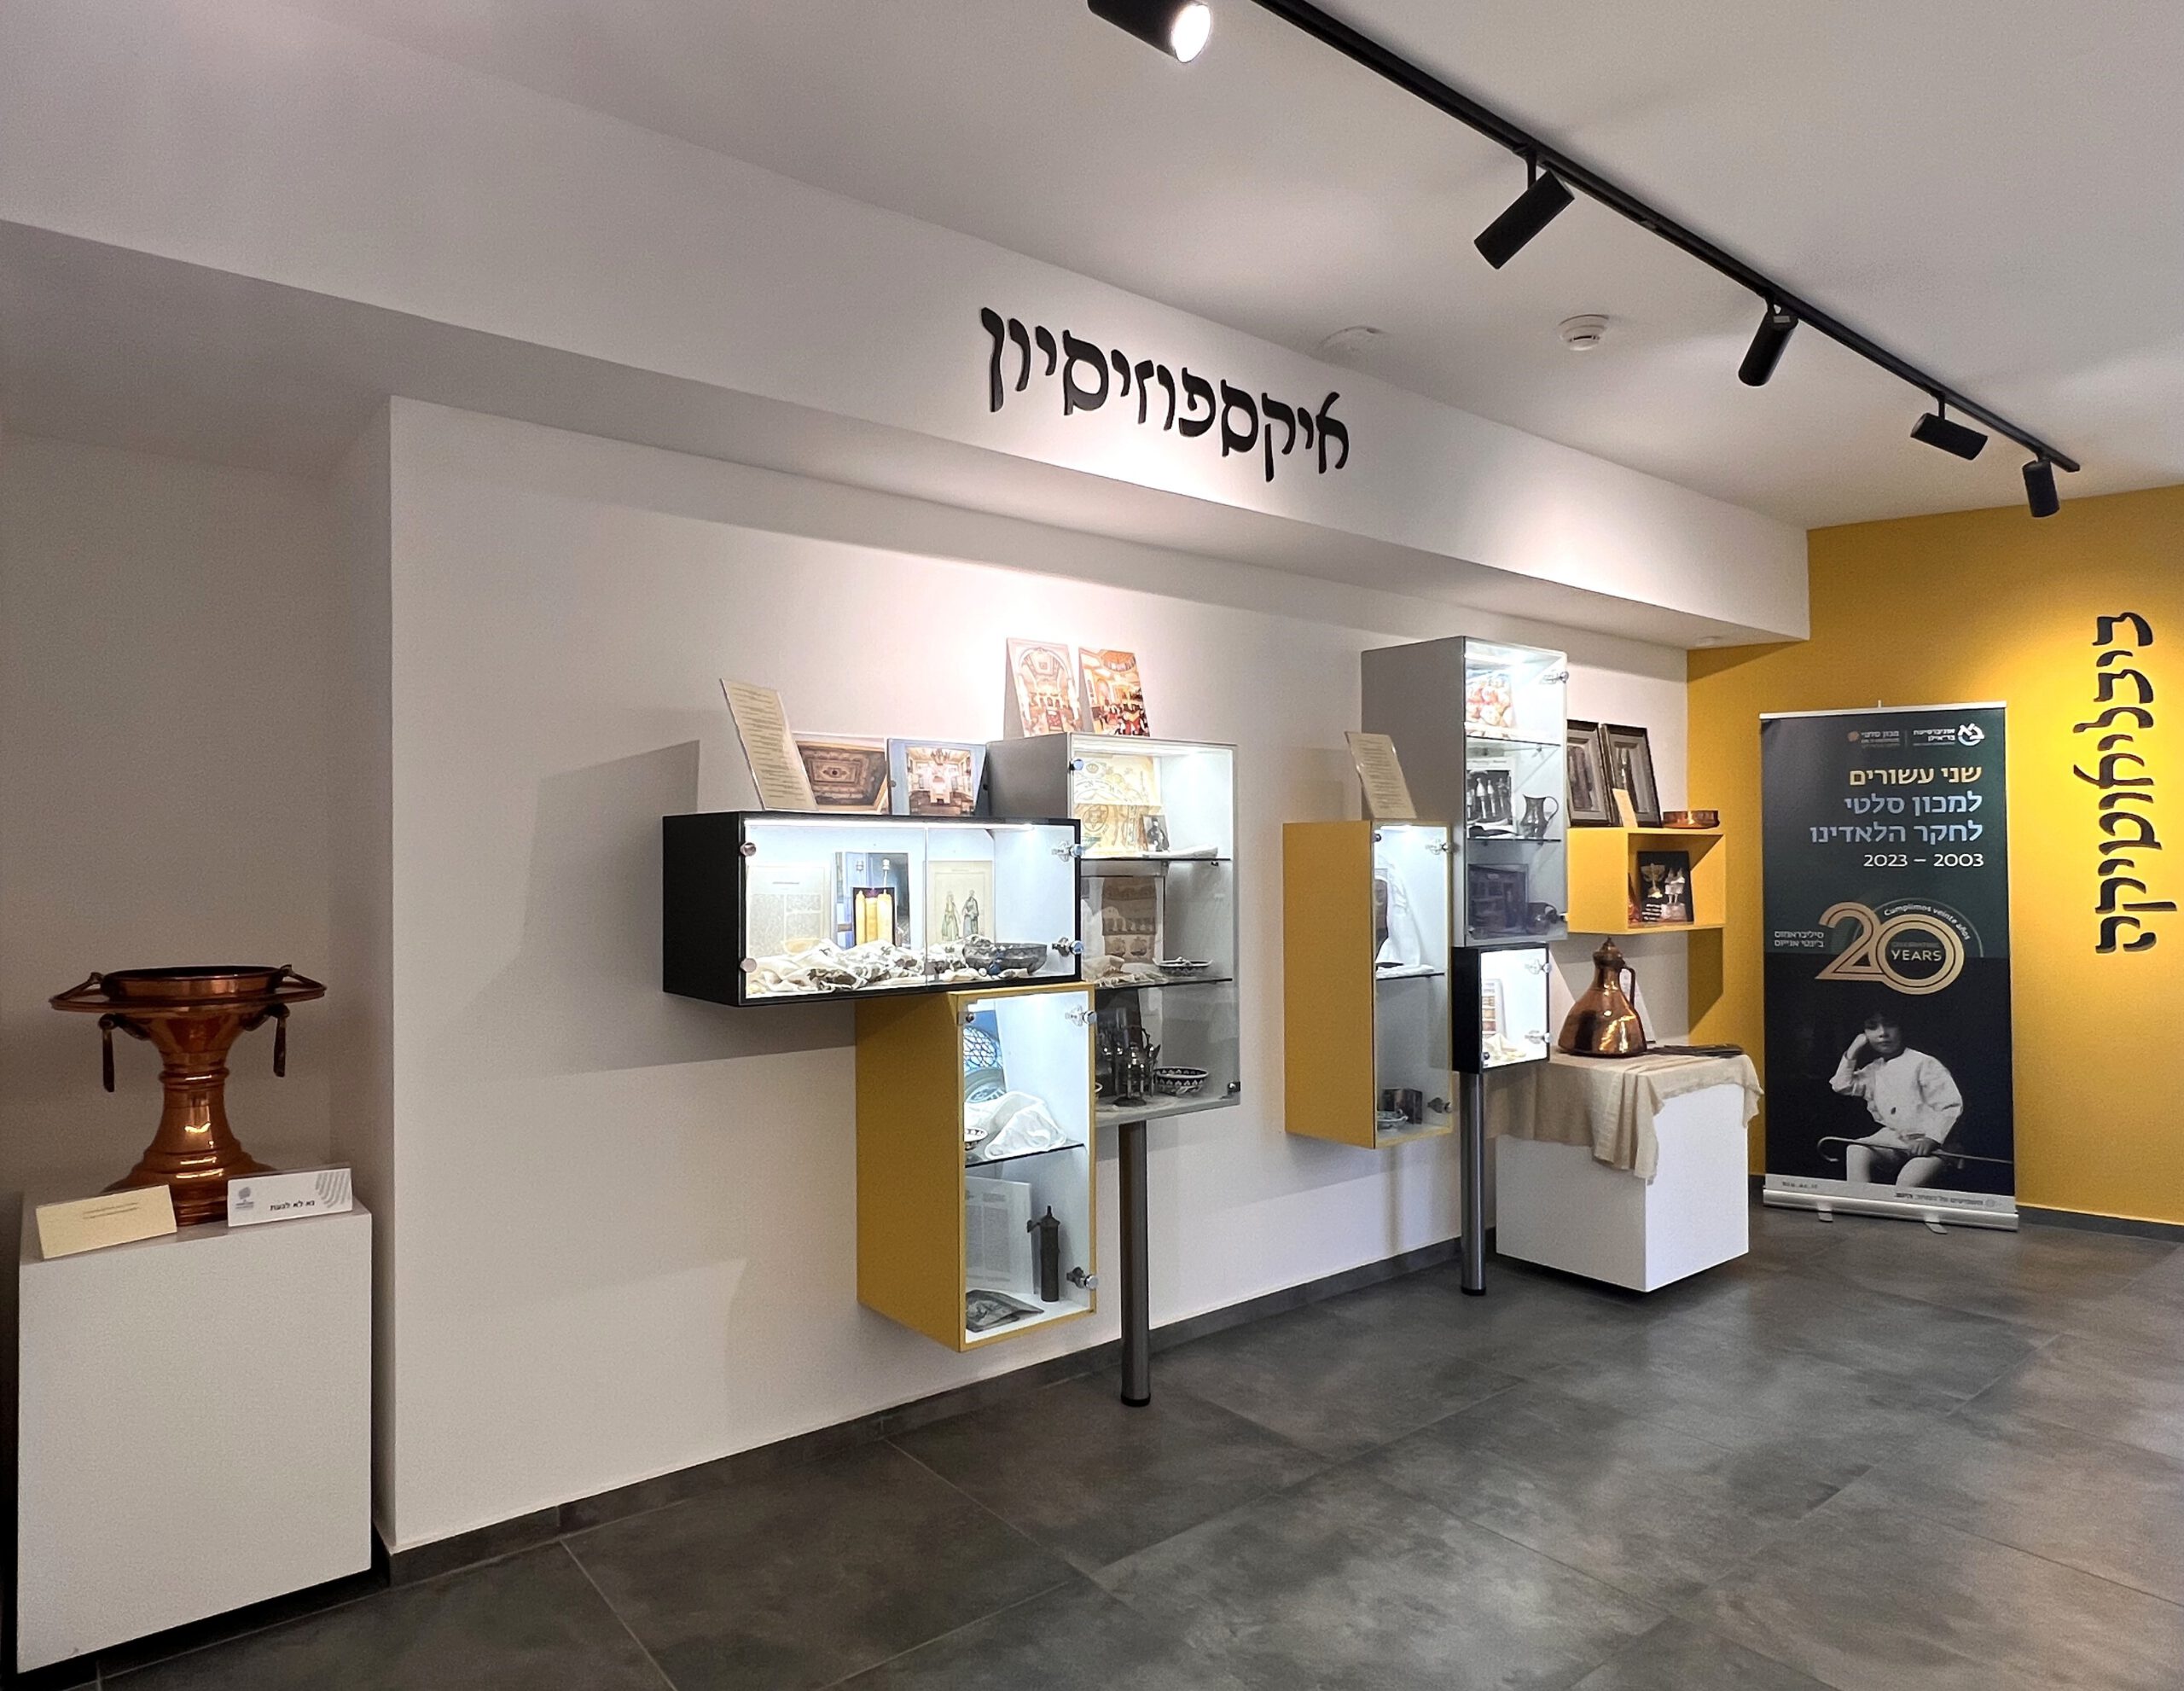 Exhibition of Turkey's Jews & Their Sephardi Heritage